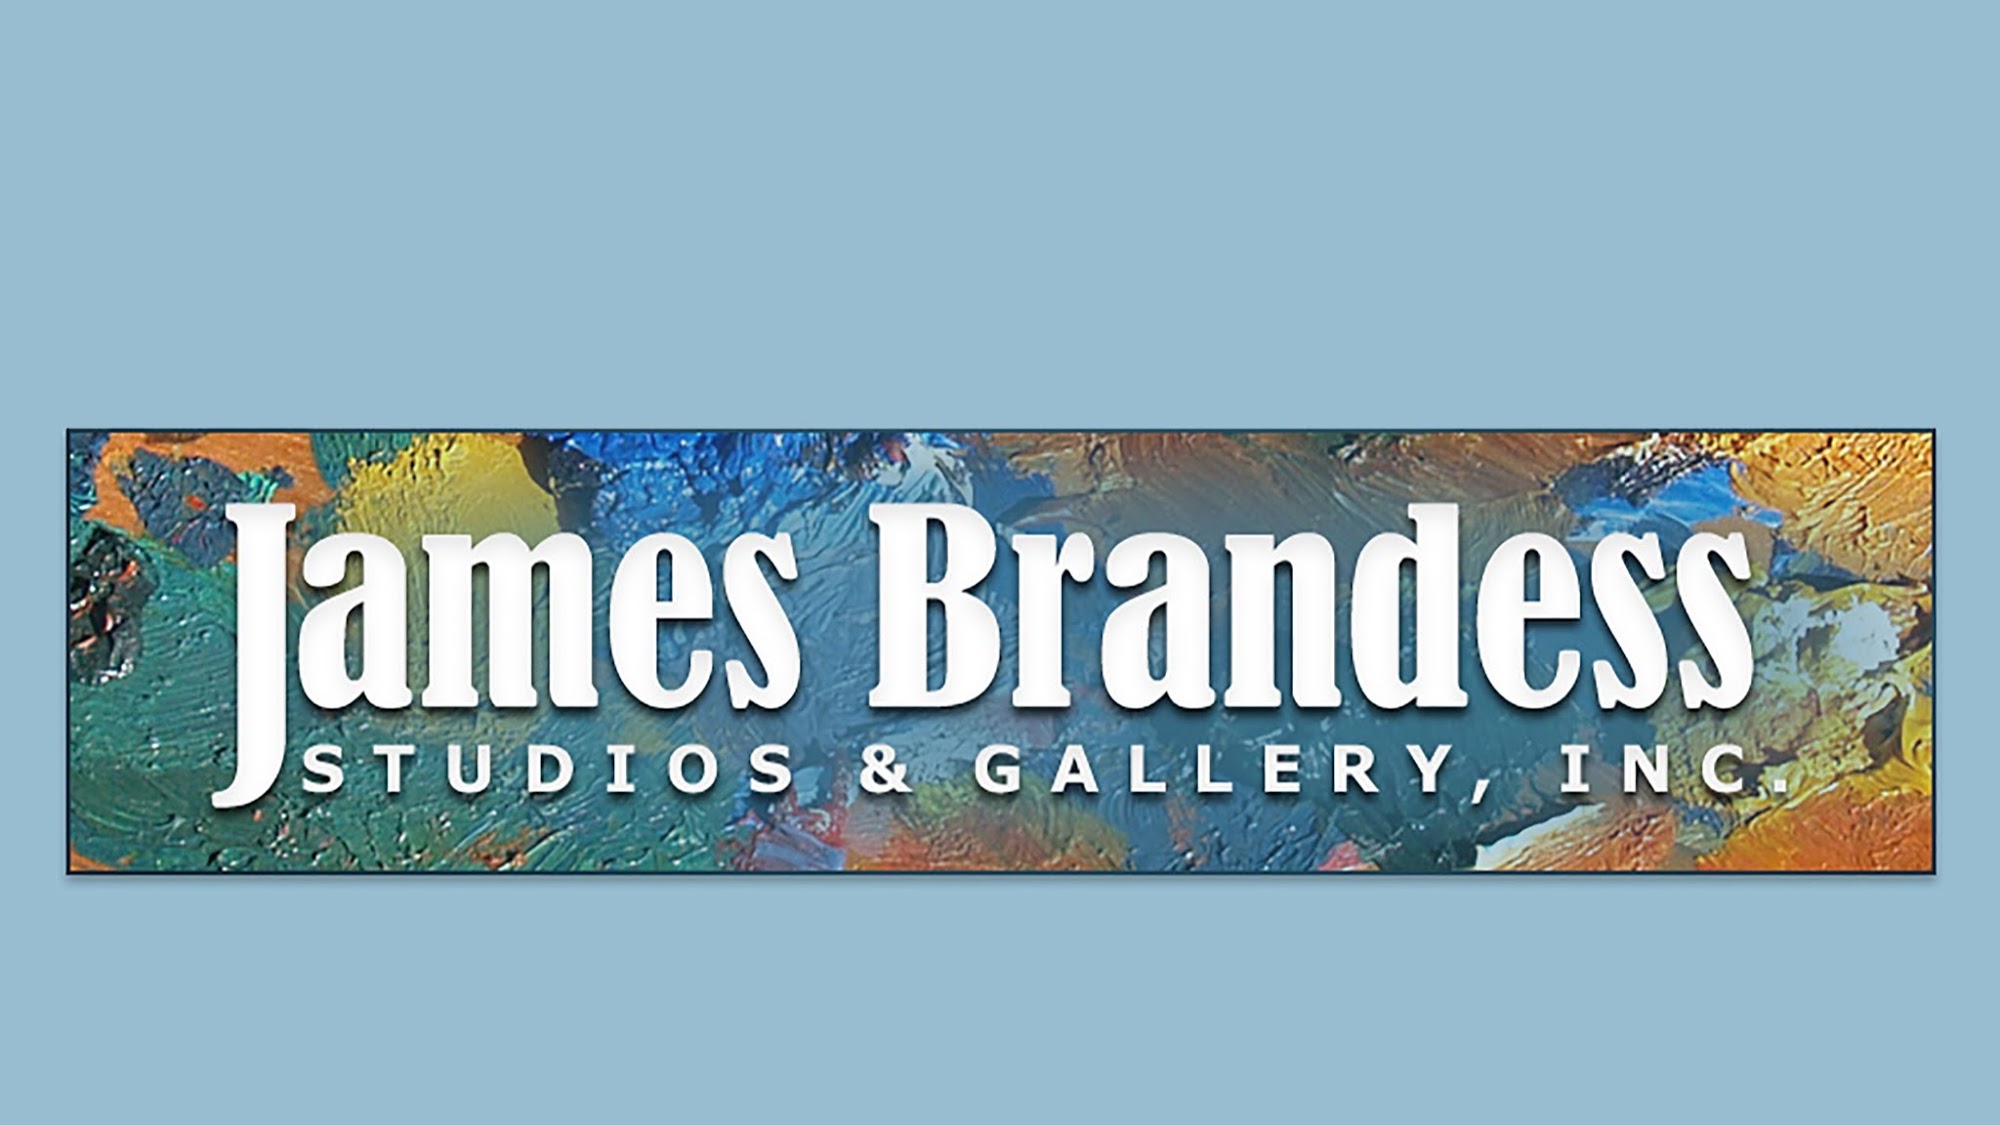 James Brandess Studios & Gallery, Inc.